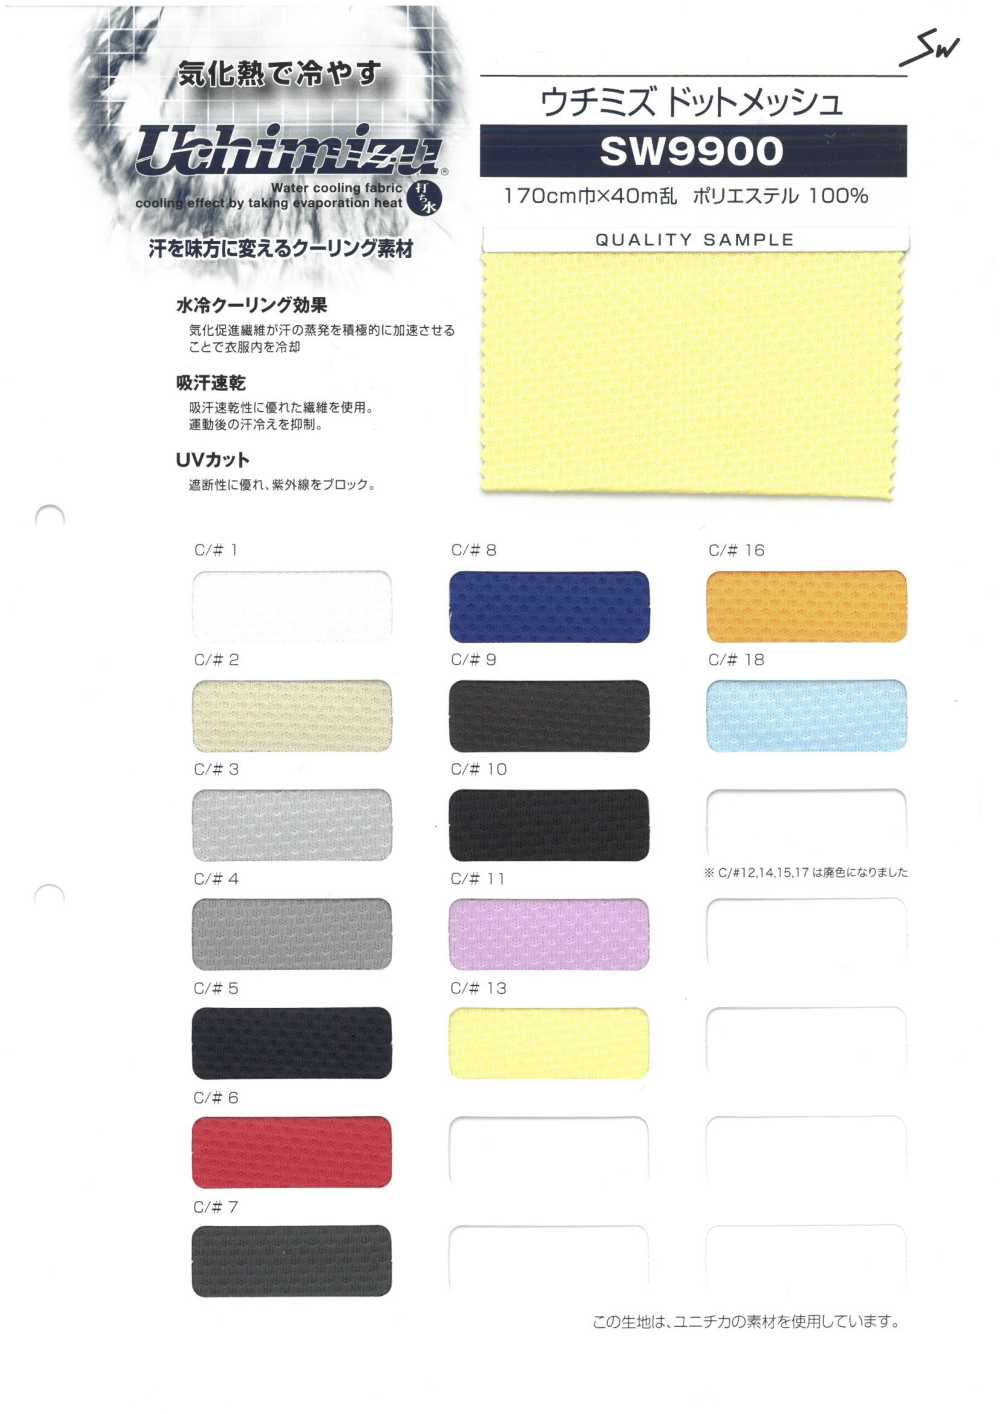 SW9900 Uchimizu-Punktnetz[Textilgewebe] Sanwa Fasern